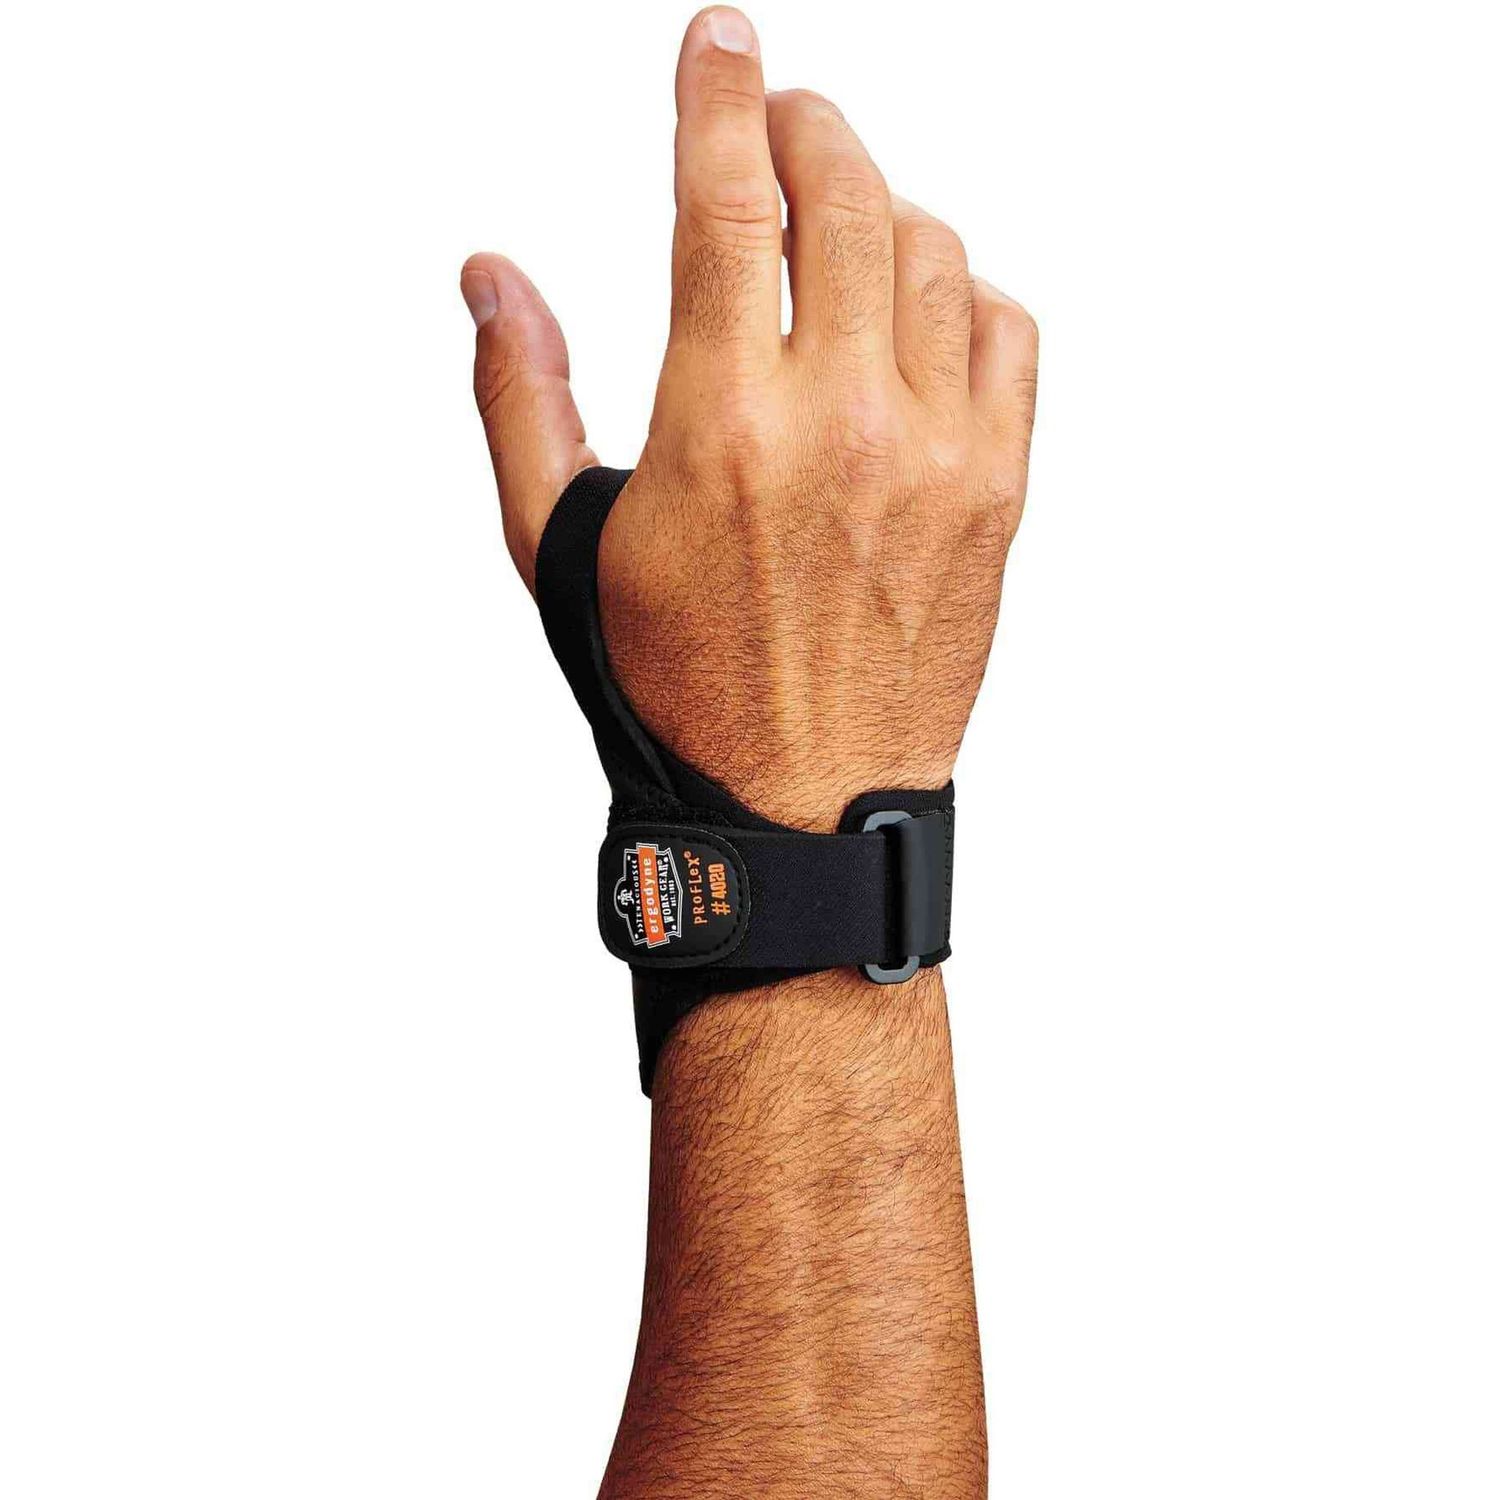 4020 Wrist Support Black, Neoprene